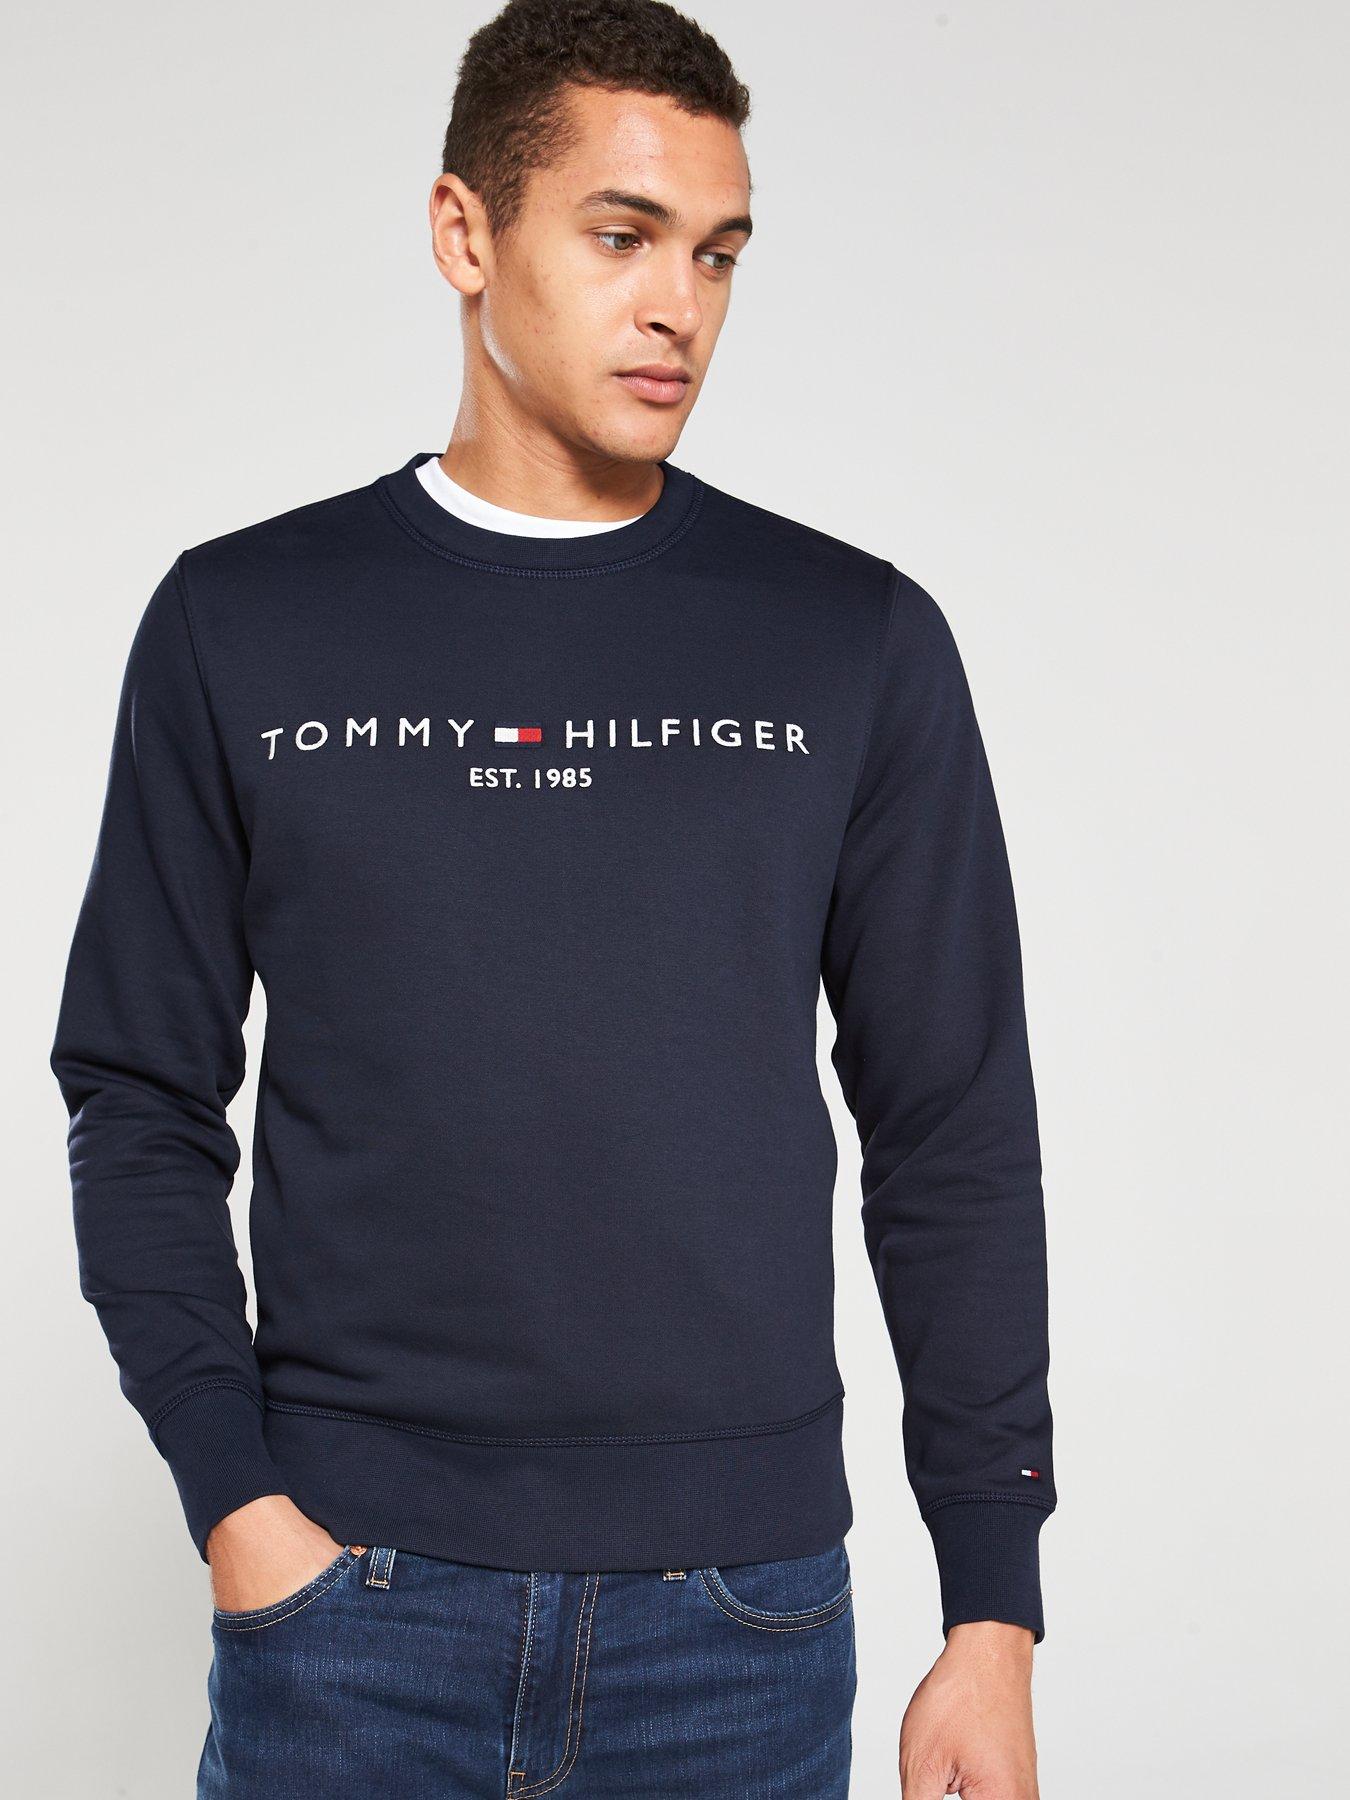 hilfiger logo sweatshirt